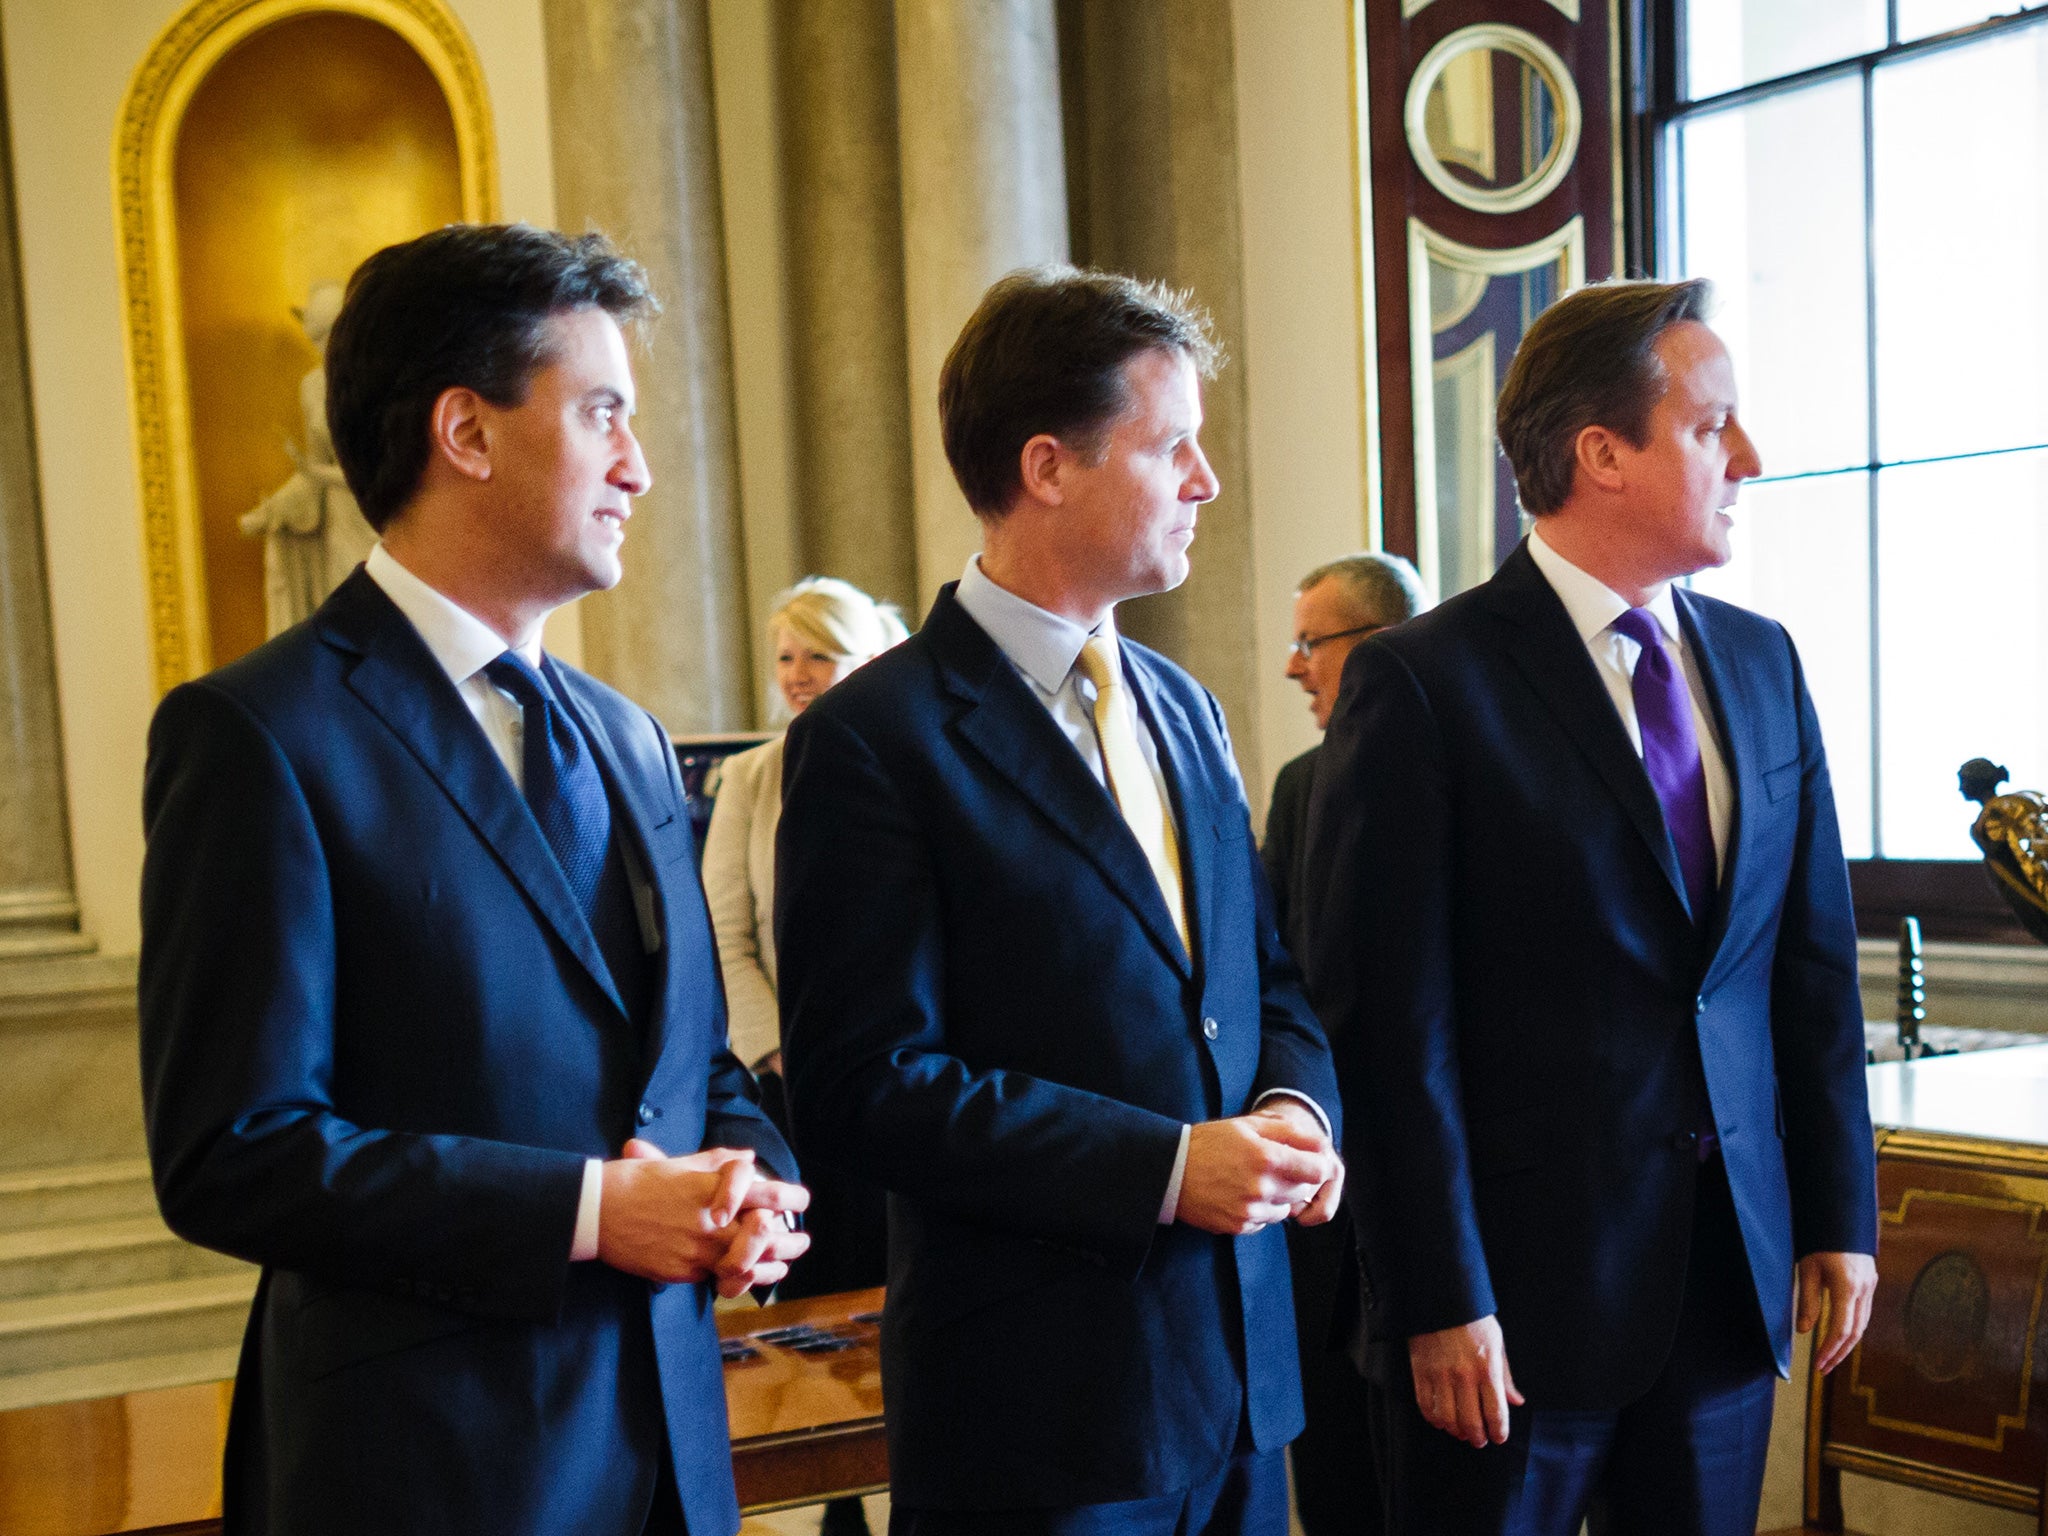 Ed Miliband, Nick Clegg, and David Cameron